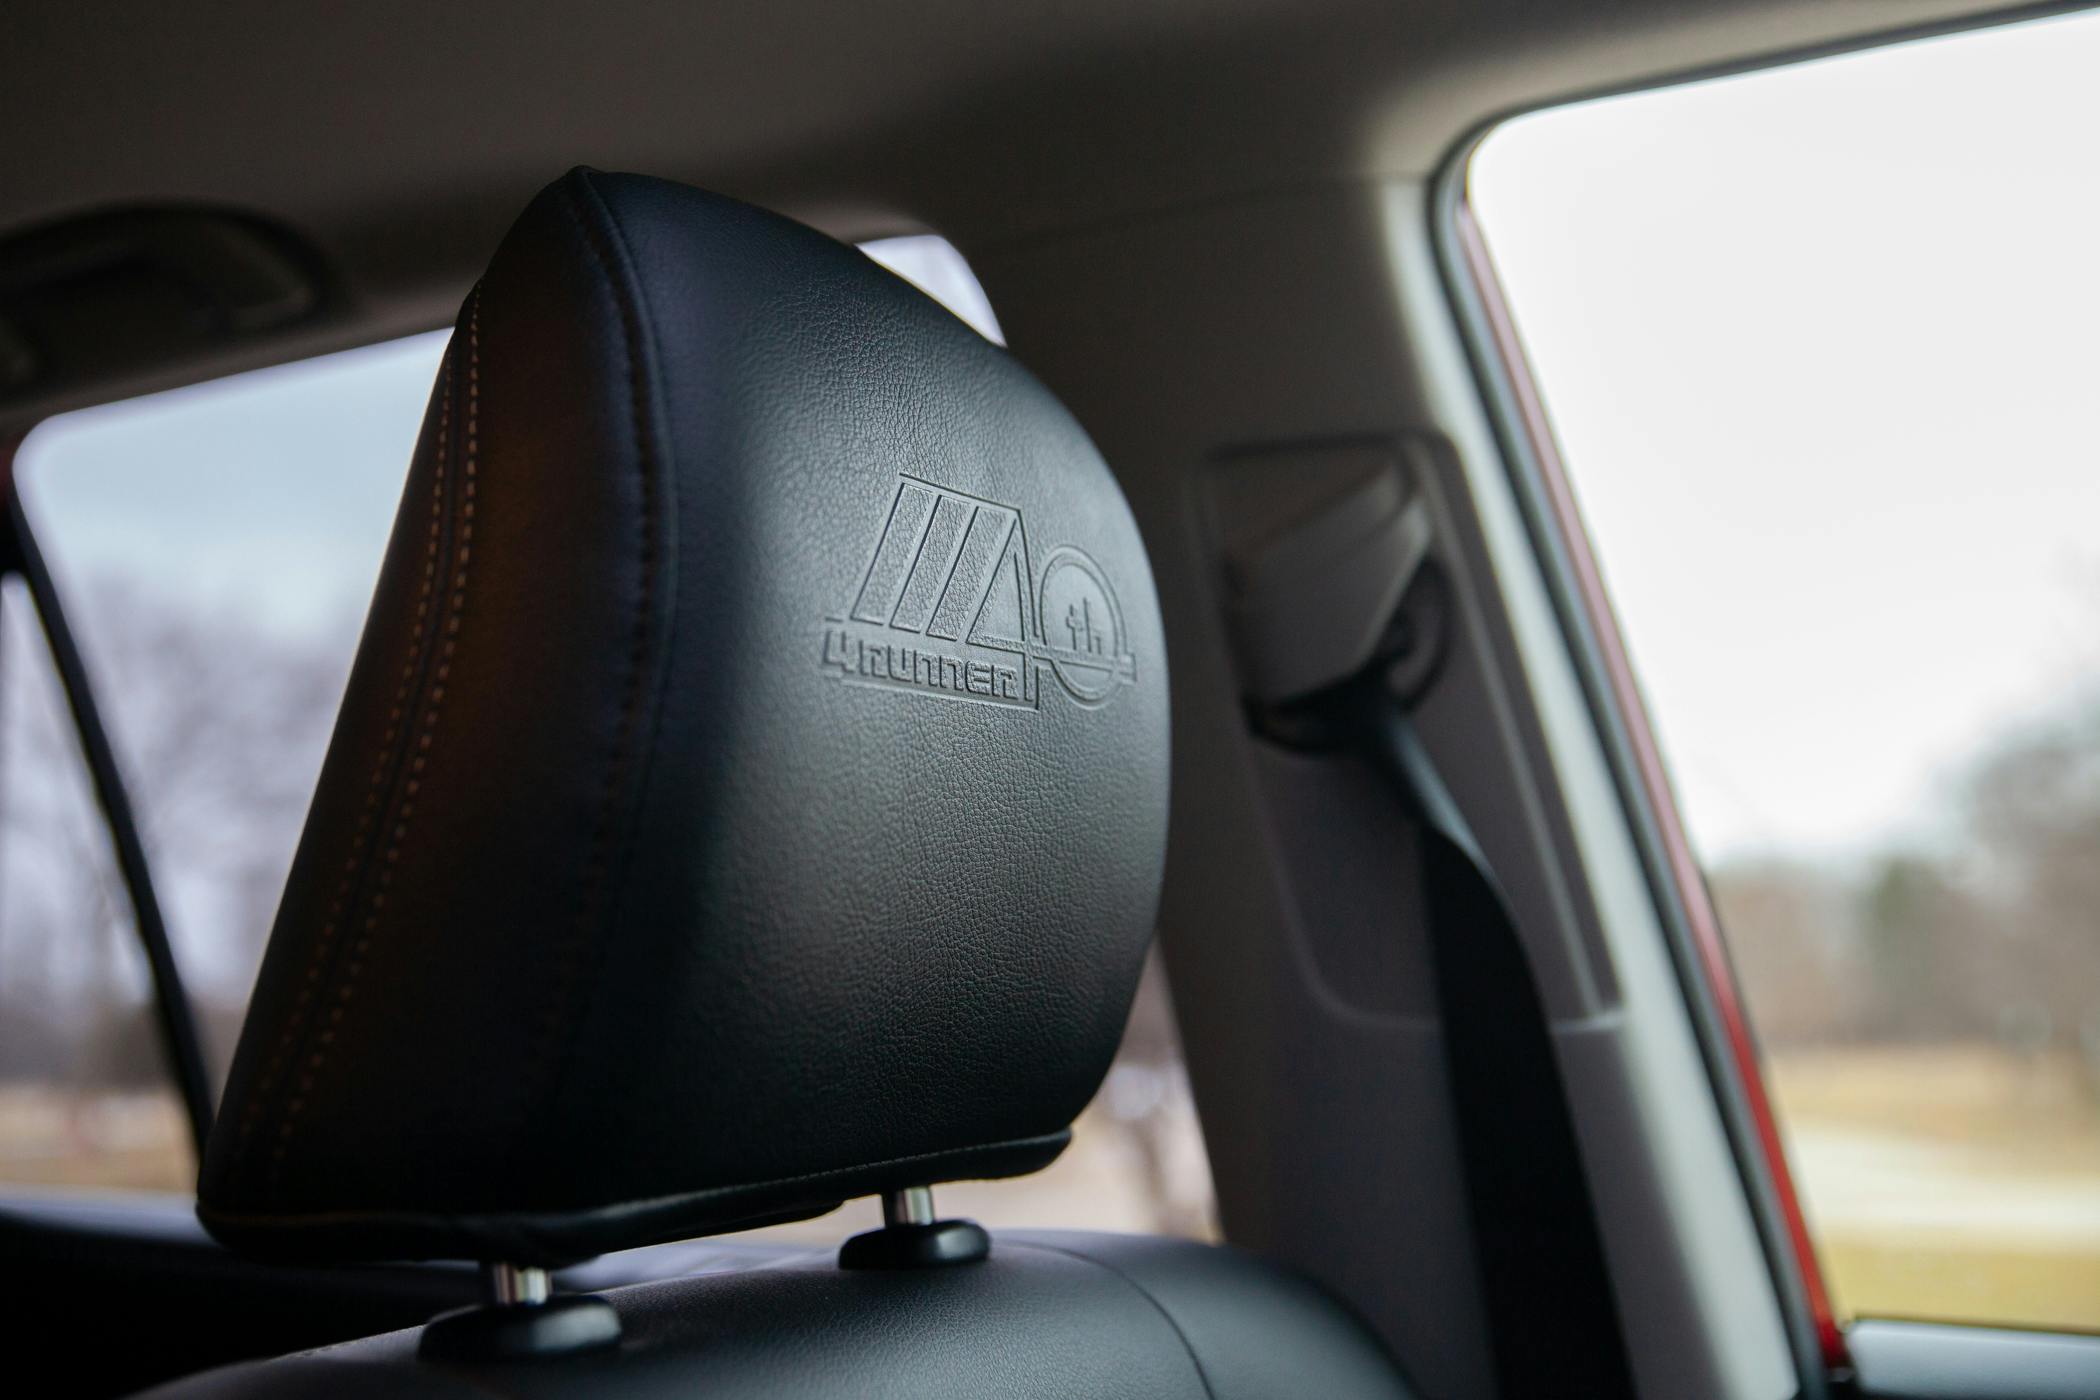 2022-Toyota-4Runner-40th-Anniversary-interior-headrest